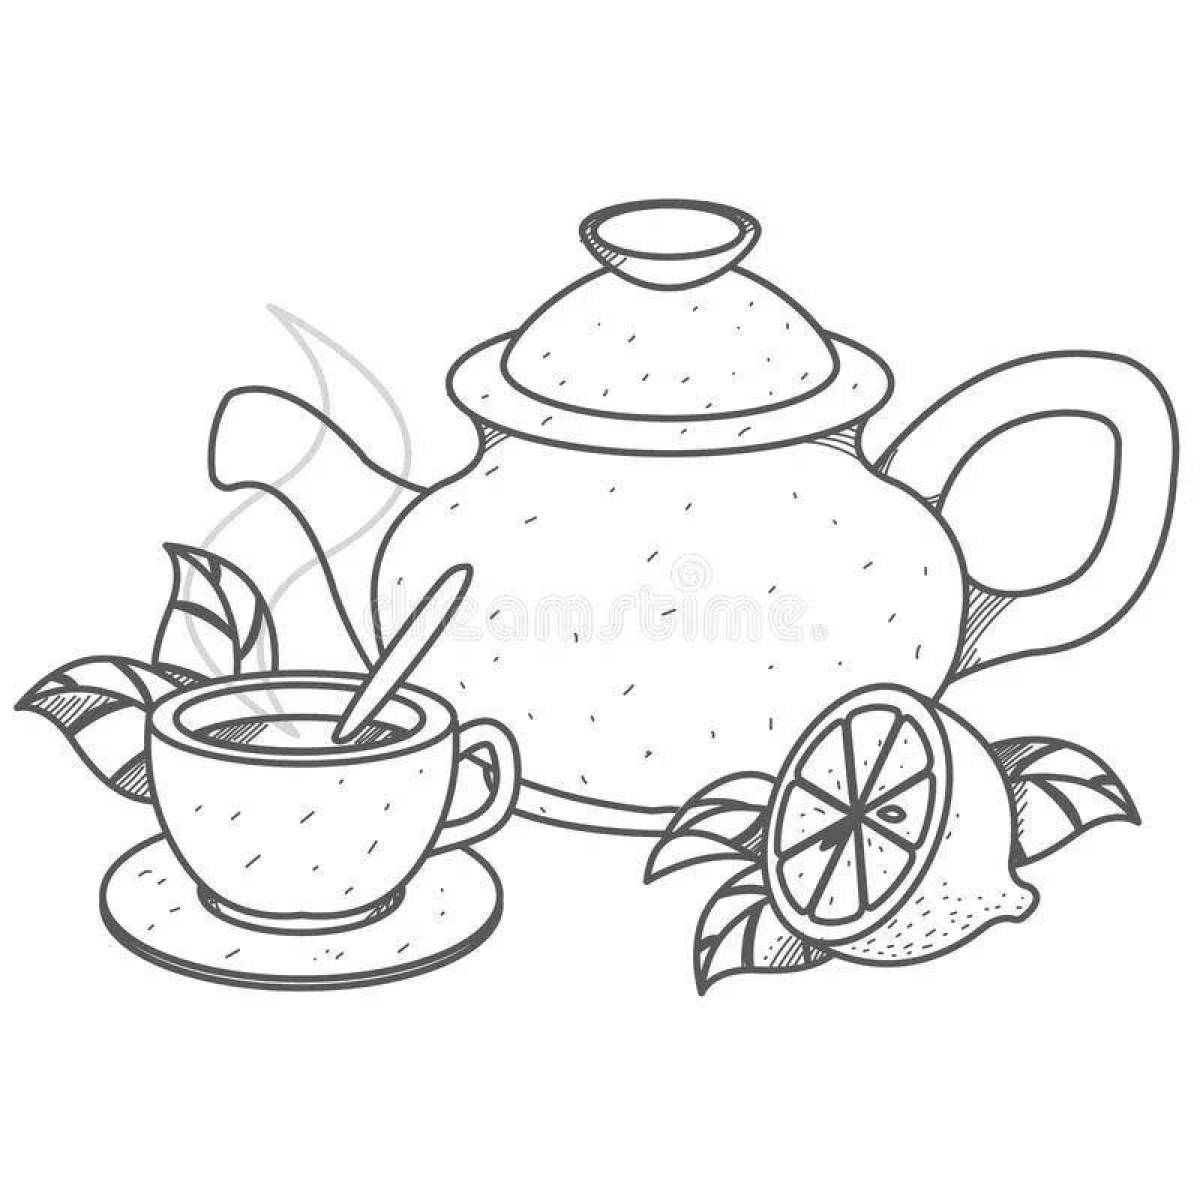 Coloring shining tea for children